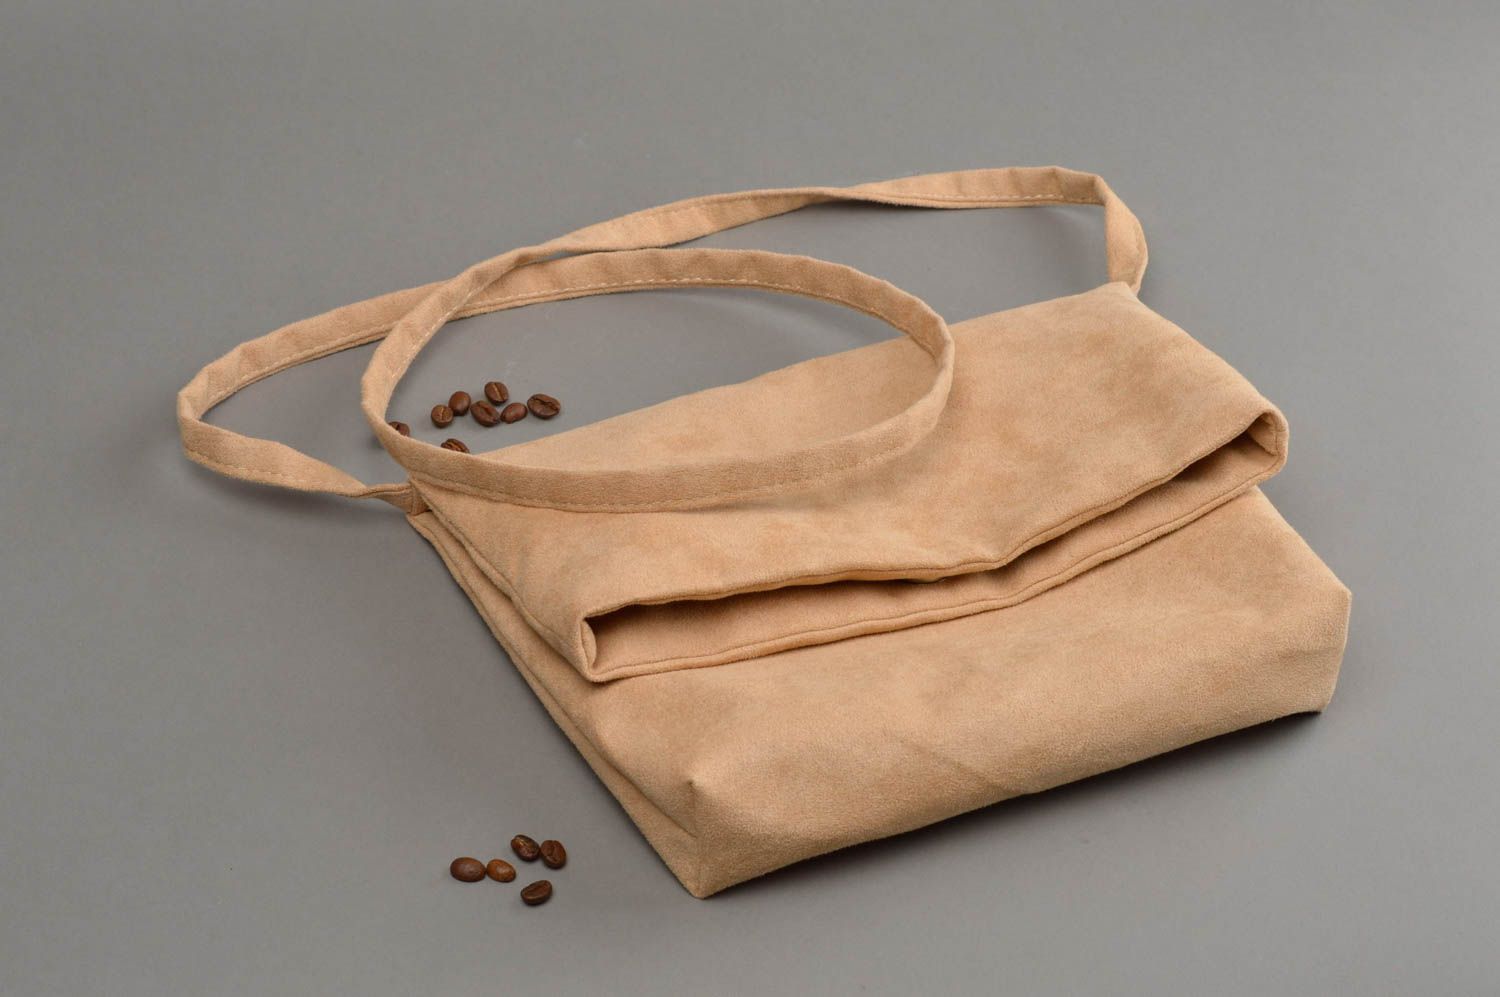 Buy Fatfatiya Women's Abstract Flower Print Handmade Handbag, Zipper Tote  Bag for Women with Detachable Adjustable Strap at Amazon.in